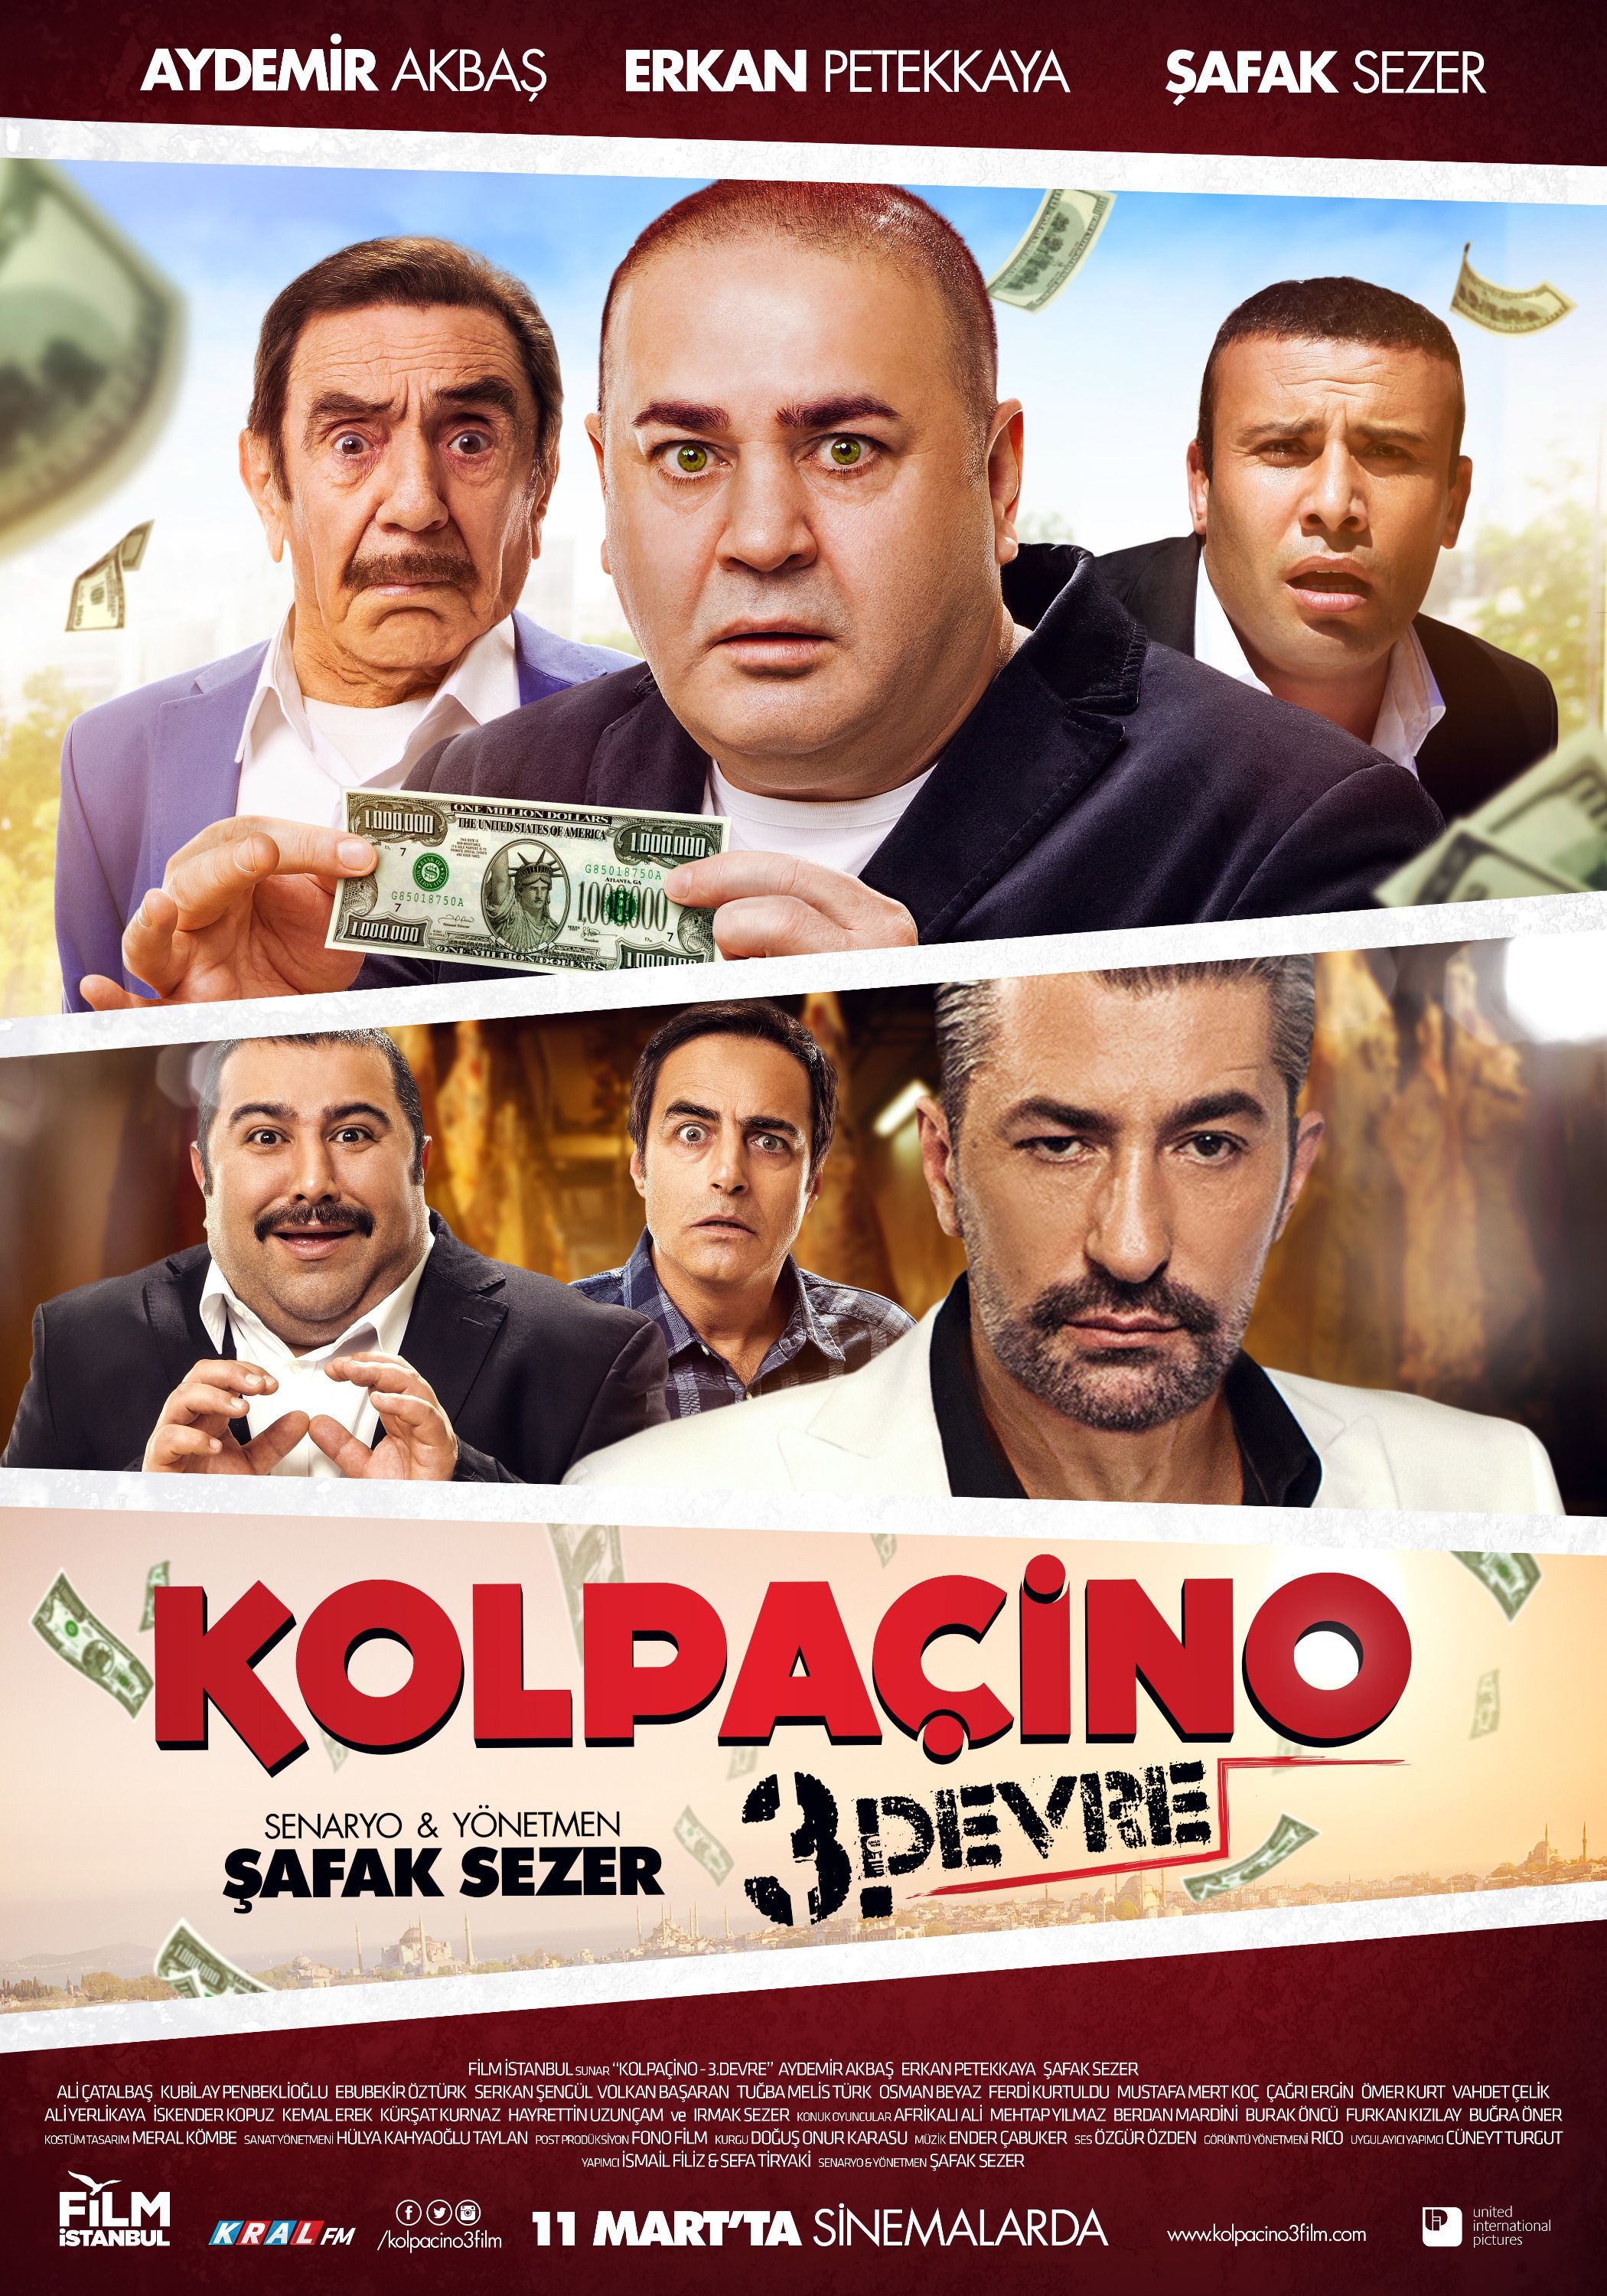 Mega Sized Movie Poster Image for Kolpaçino 3. Devre 